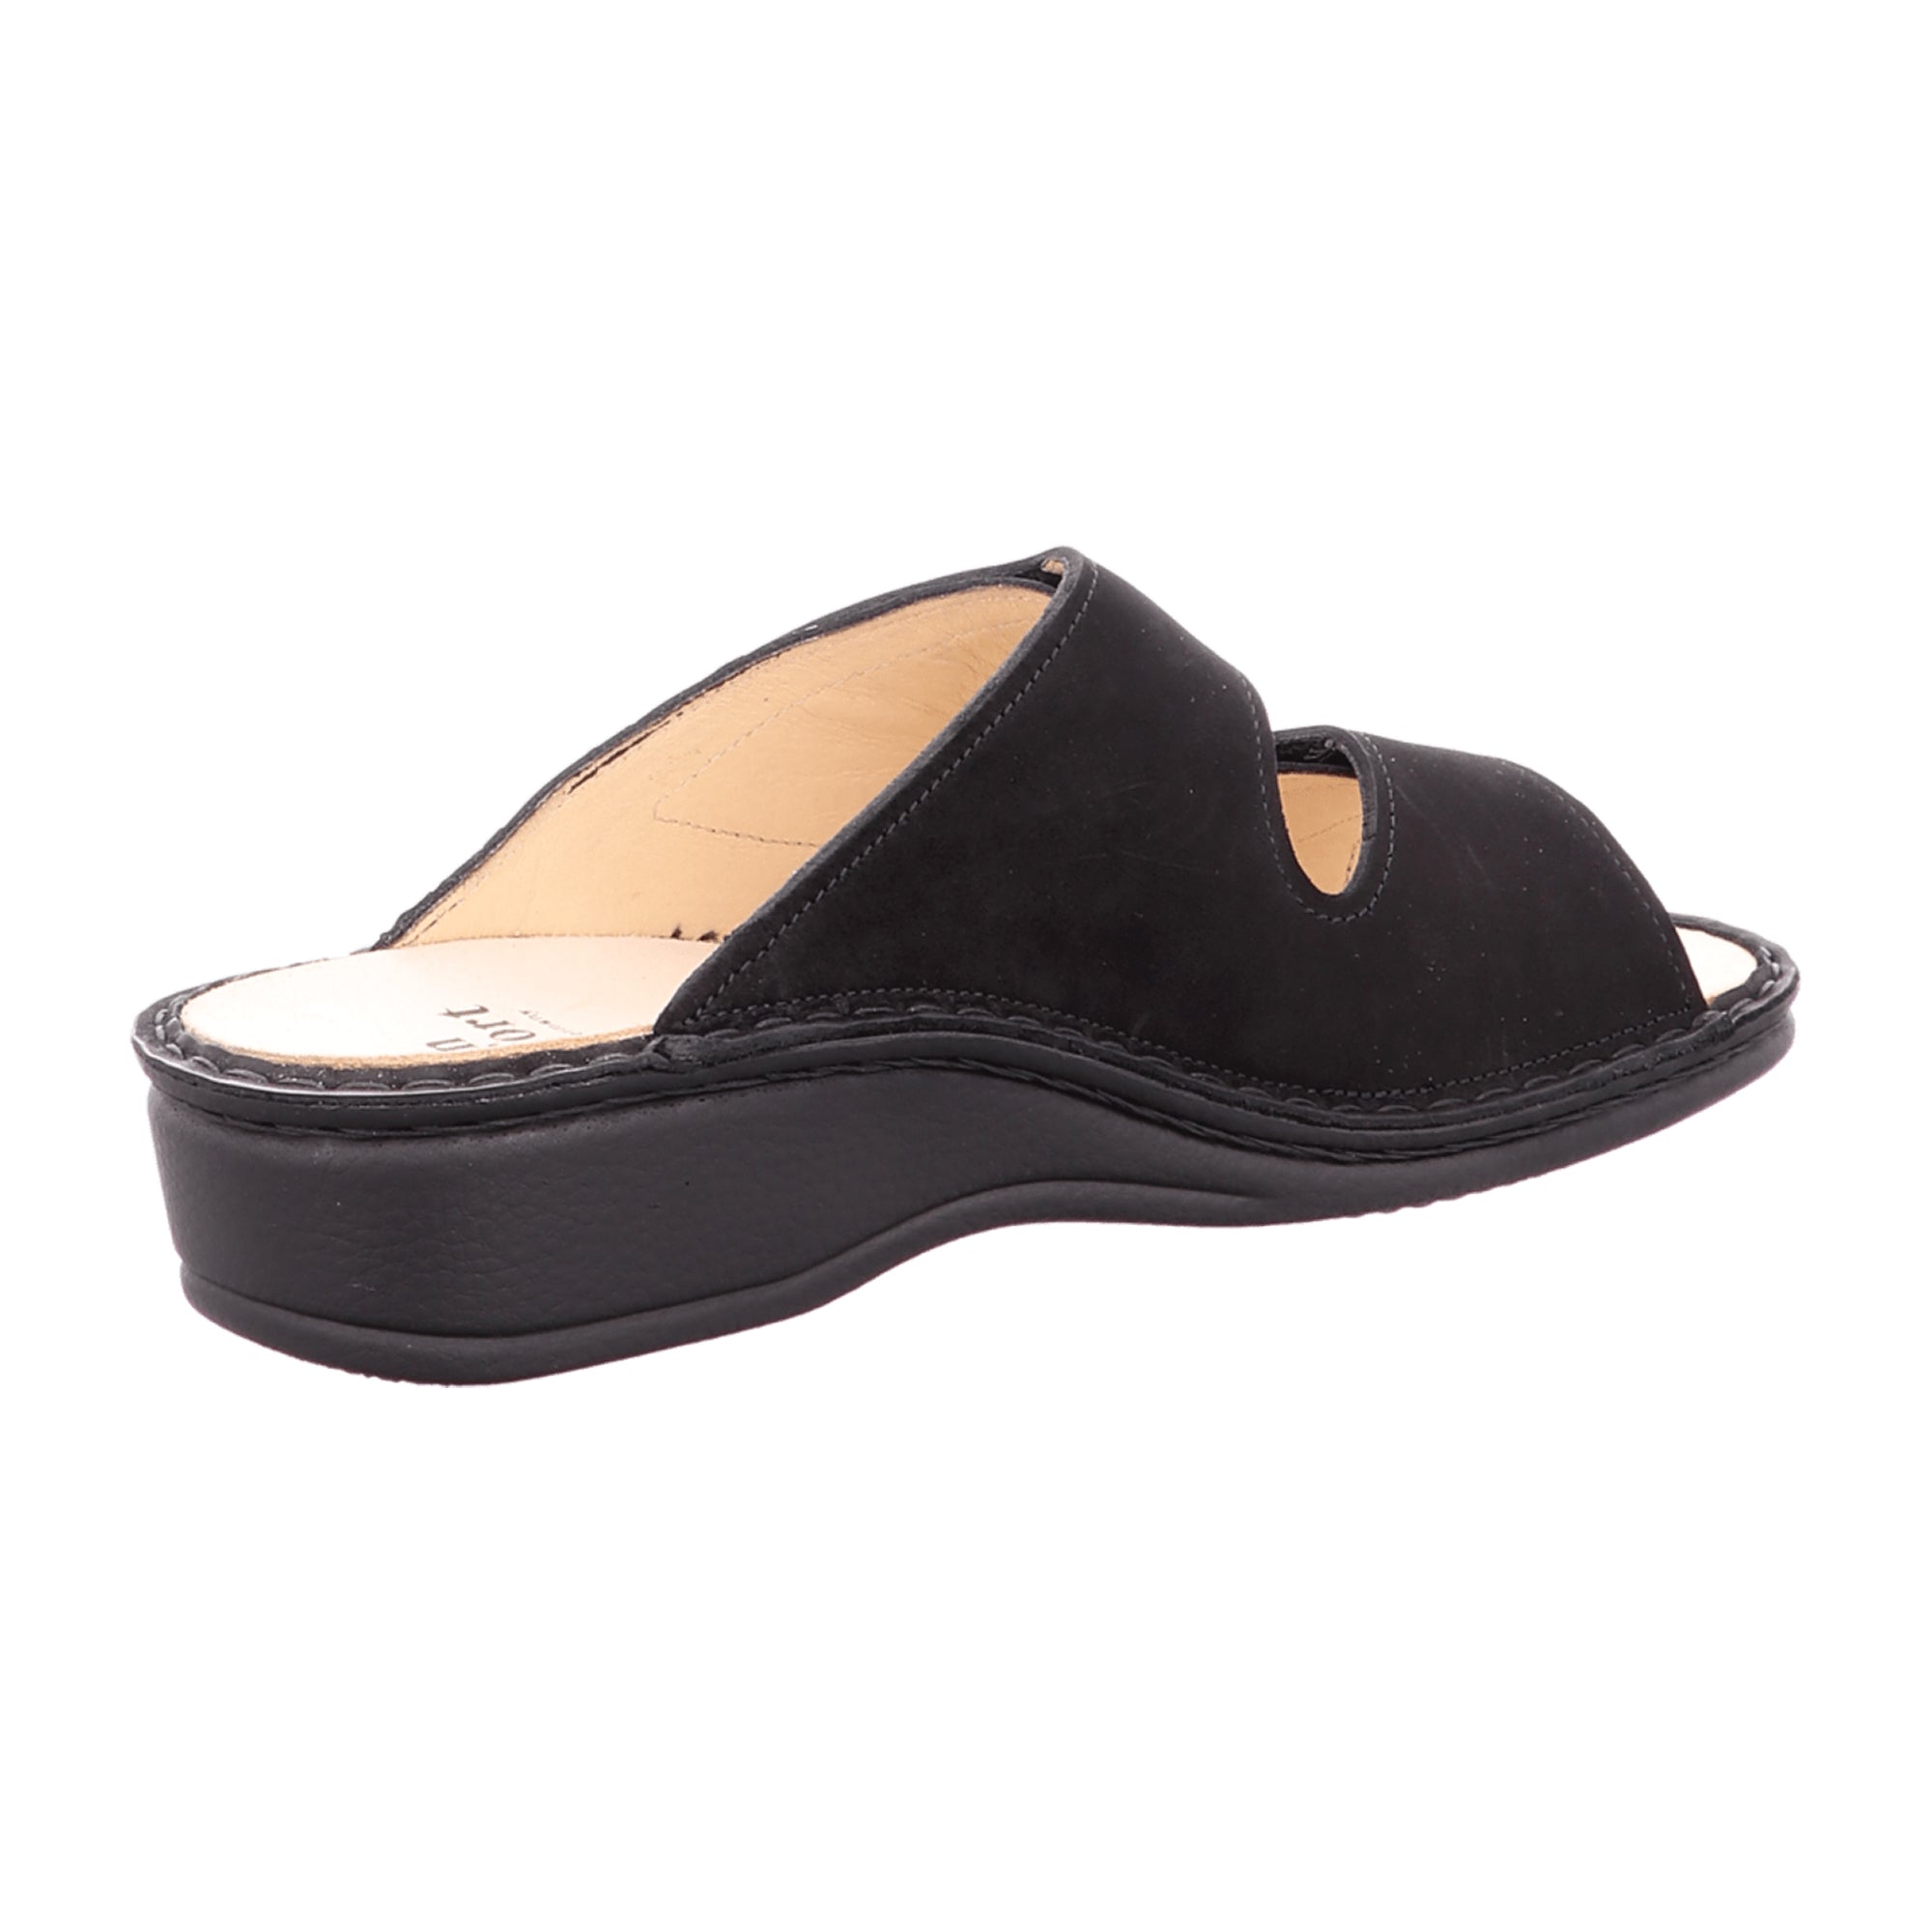 Finn Comfort Jamaica Women's Sandals, Stylish Black Comfort Sandals